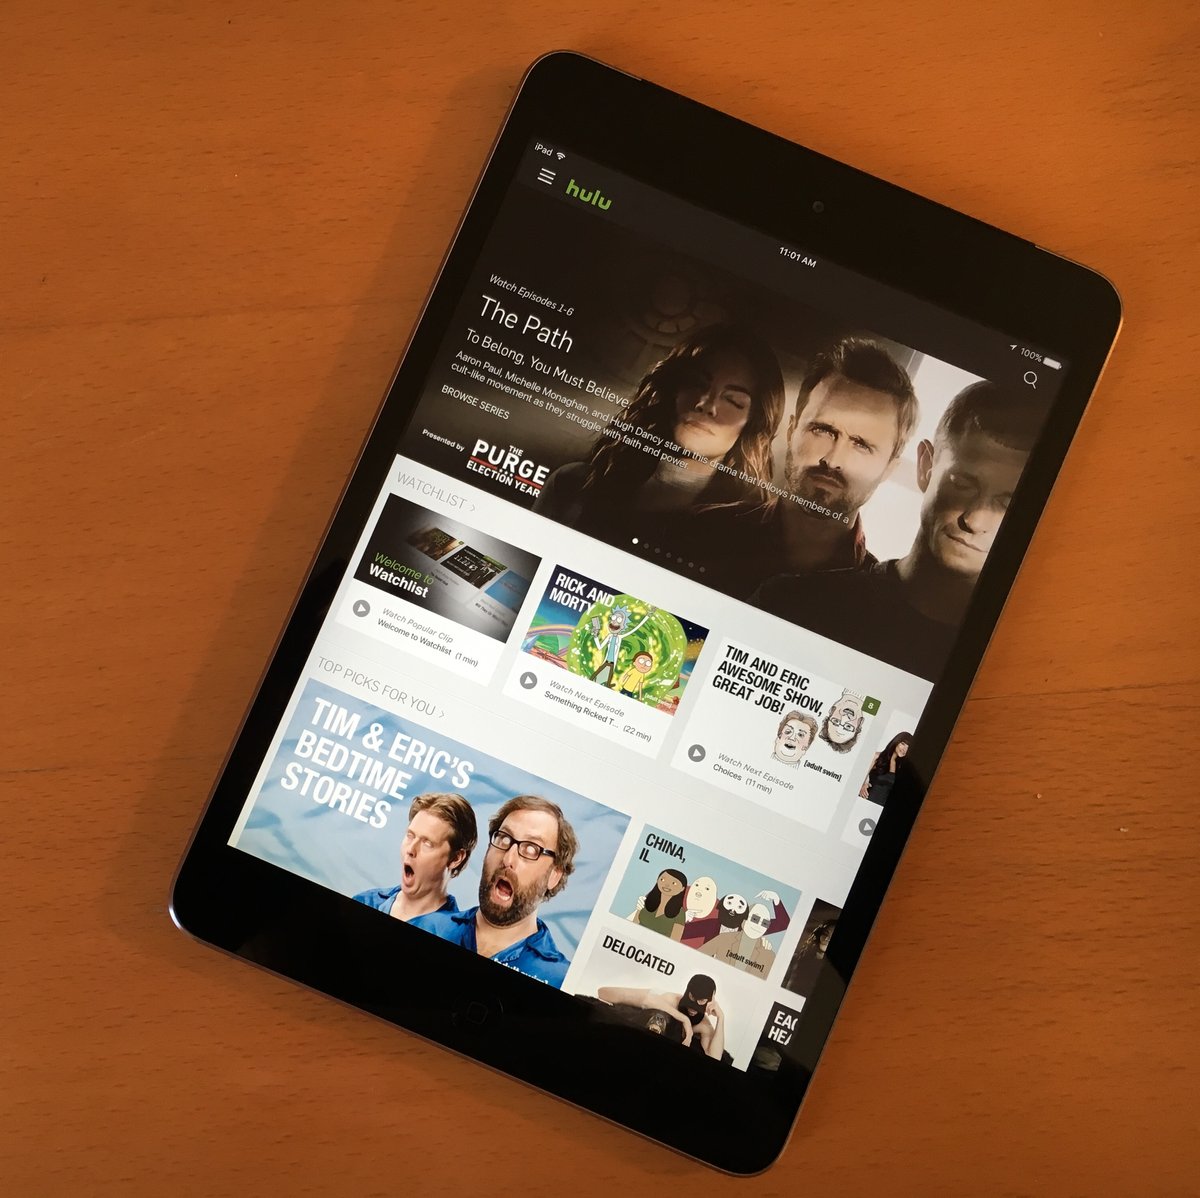 Sprint exec Why a Hulu deal makes sense